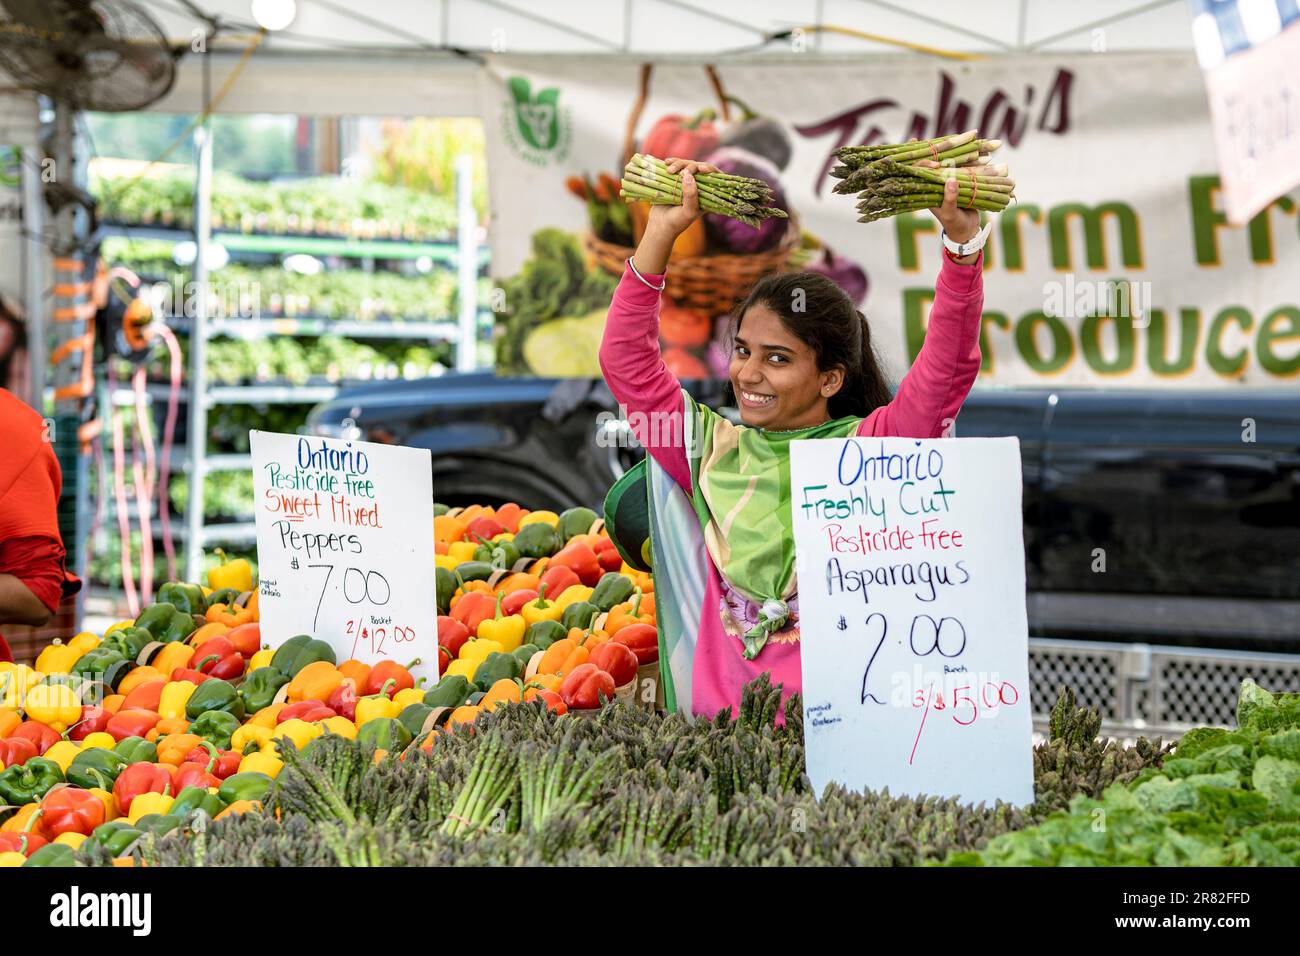 St. Jacobs Farmers Market Obst- und Gemüsehändler, Ontario, Kanada Stockfoto